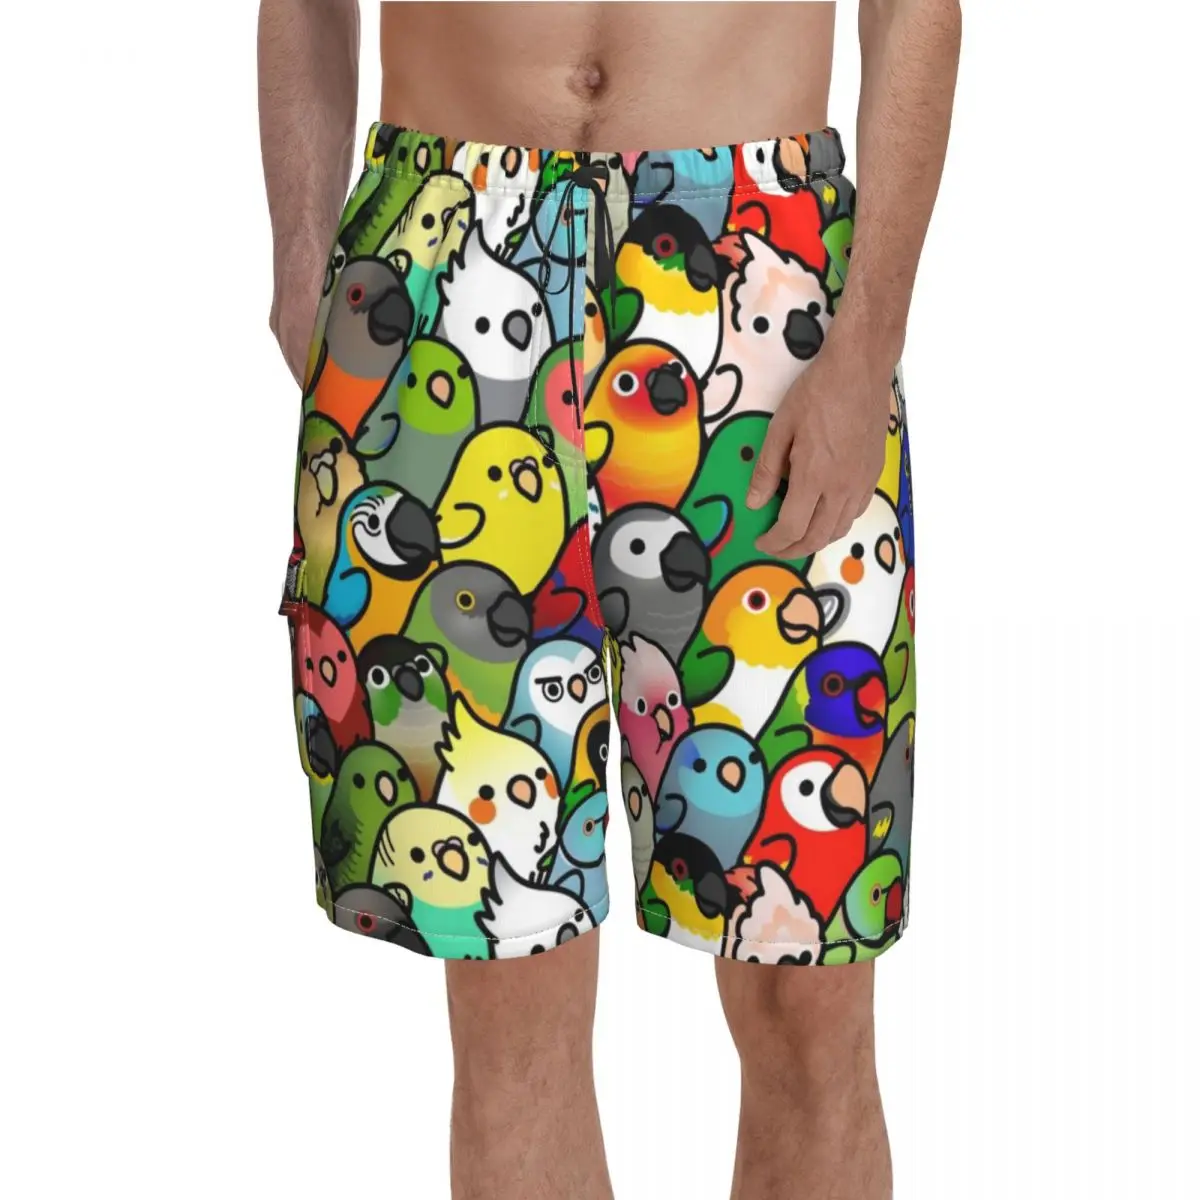 

Parrot Board Shorts Everybirdy Pattern Beach Short Pants Elastic Waist Cute Print Swim Trunks Large Size